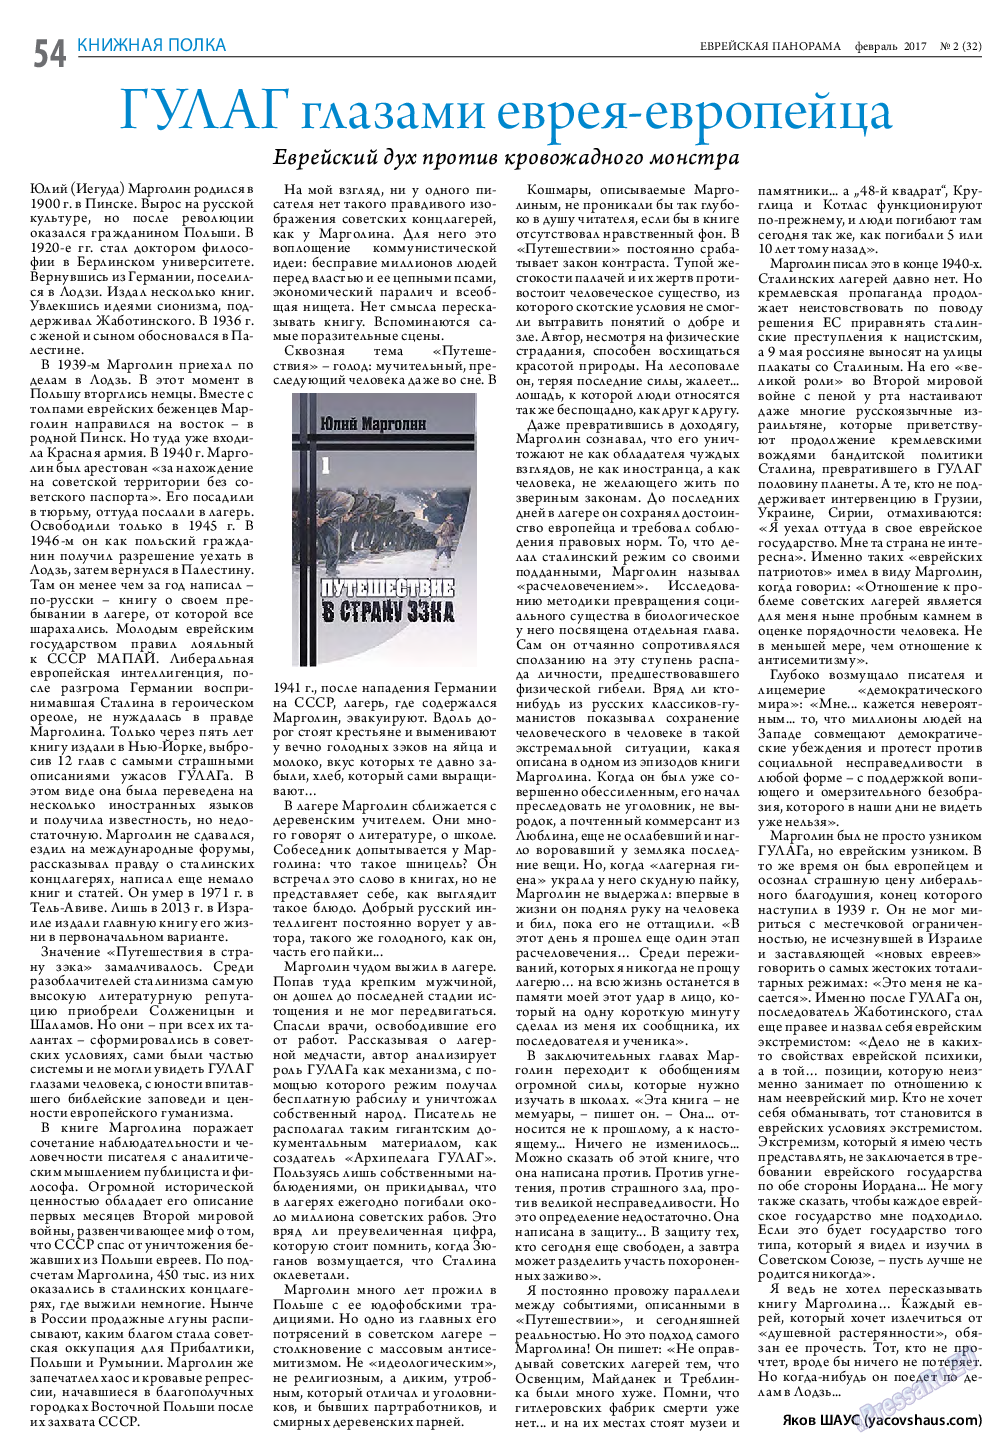 Еврейская панорама, газета. 2017 №2 стр.54